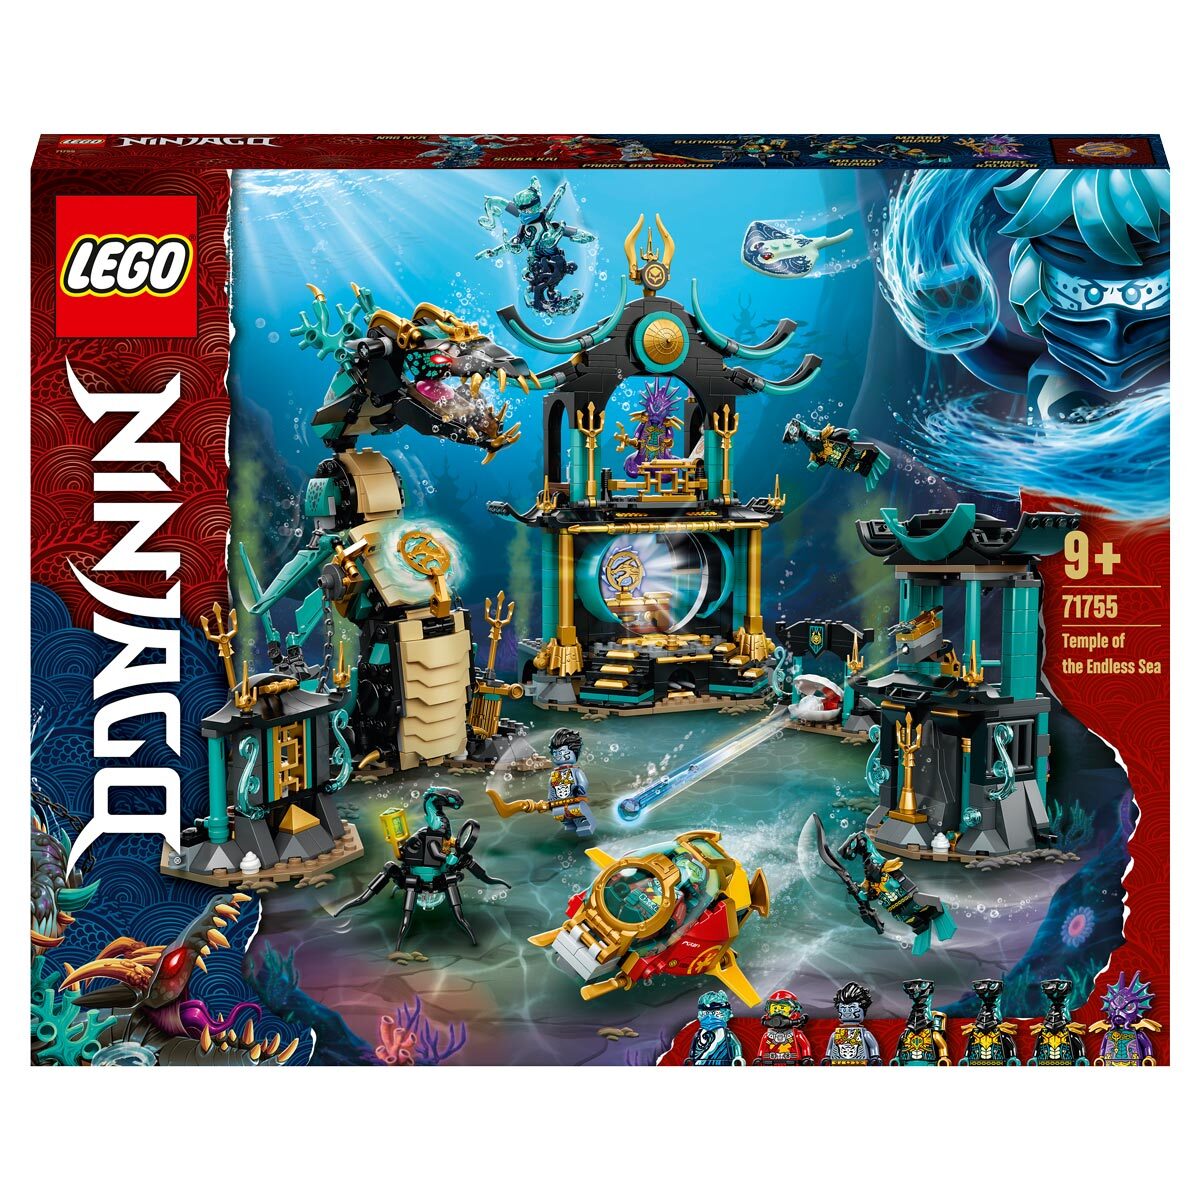 Buy LEGO Ninjago Temple of the Endless Sea Box Image at costco.co.uk